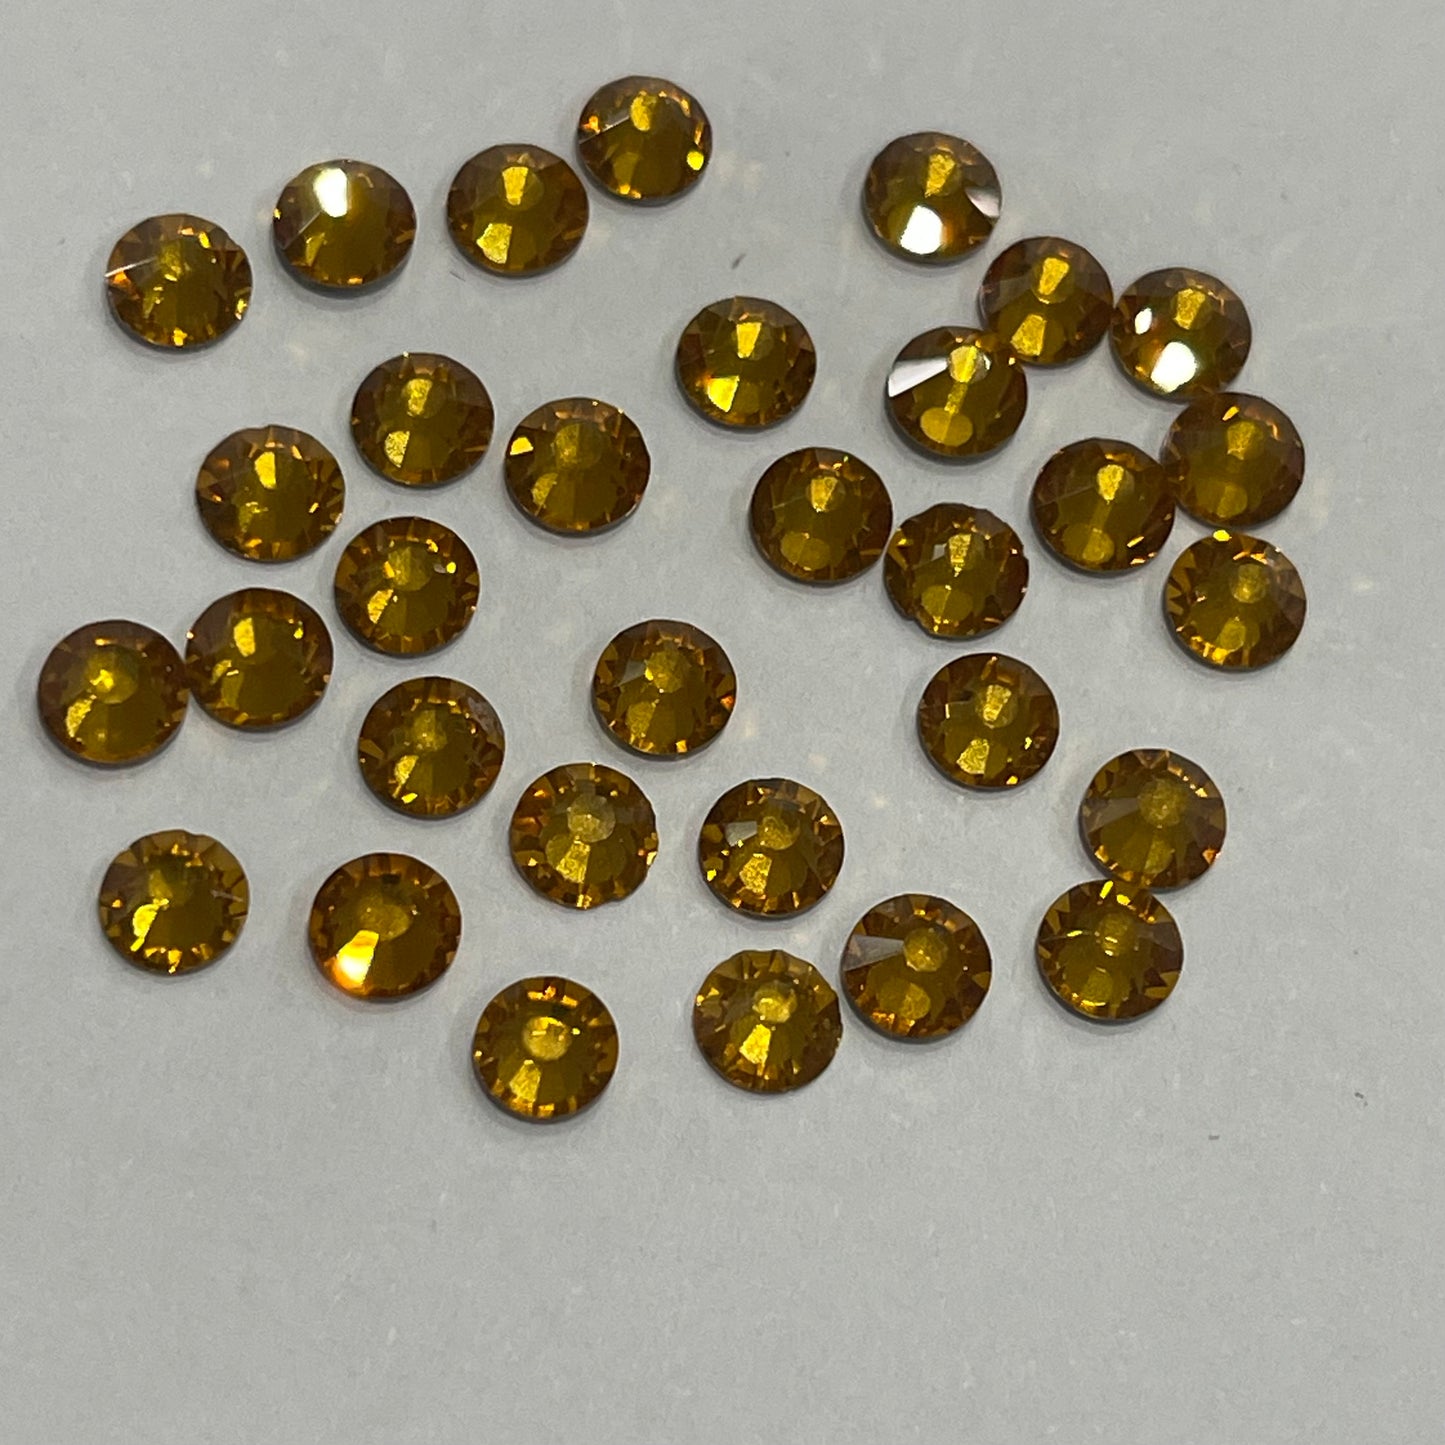 Topaz - Hotfix Diamante AAA Crystals